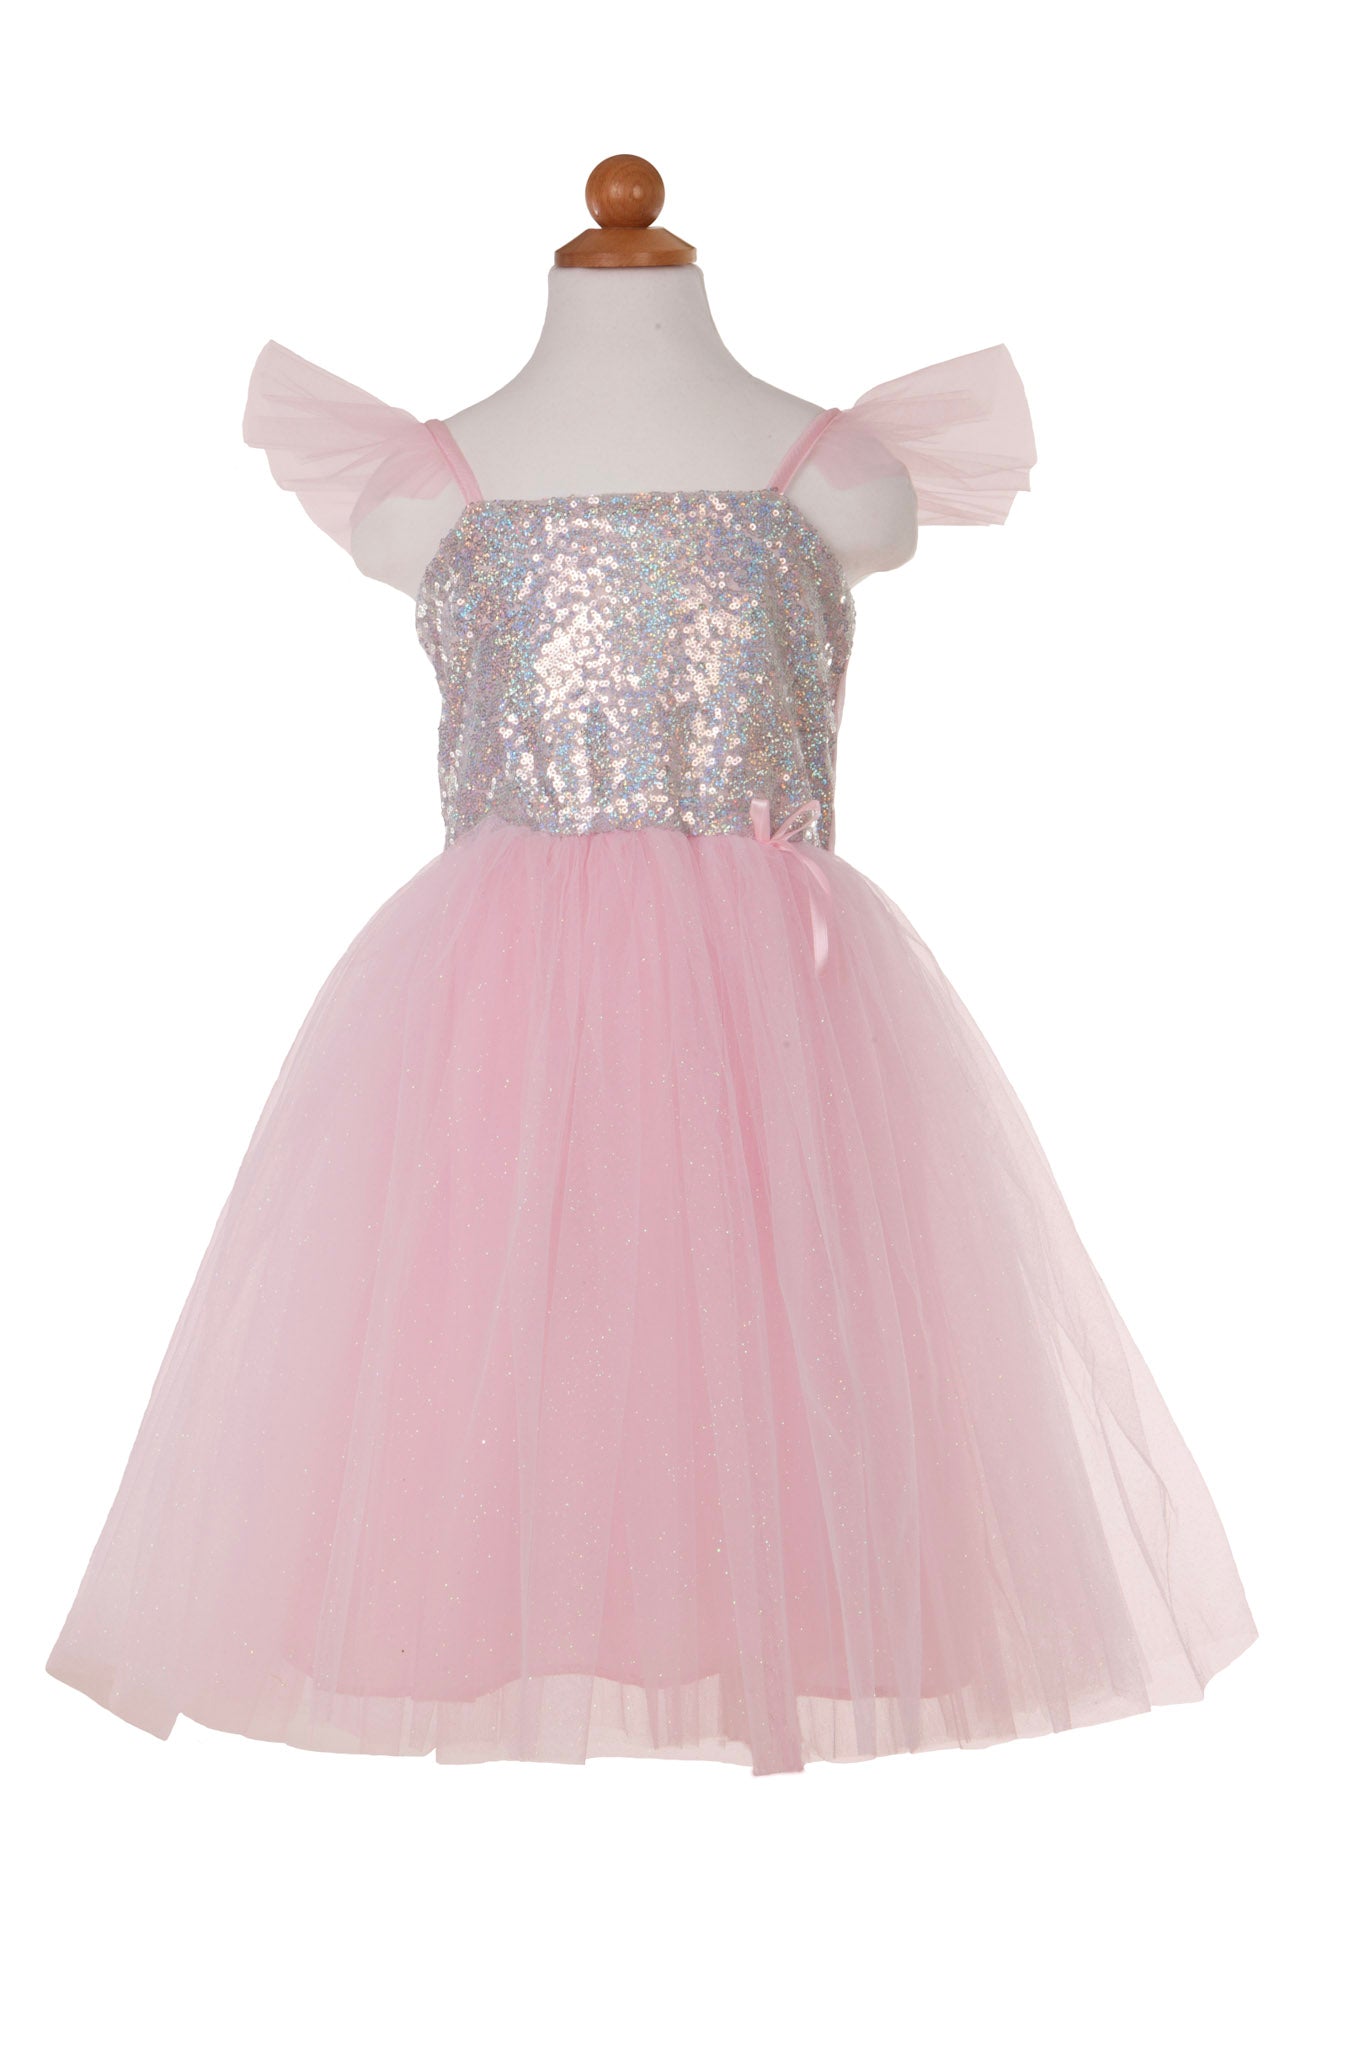 Sequins Princess Dress Size 5-6